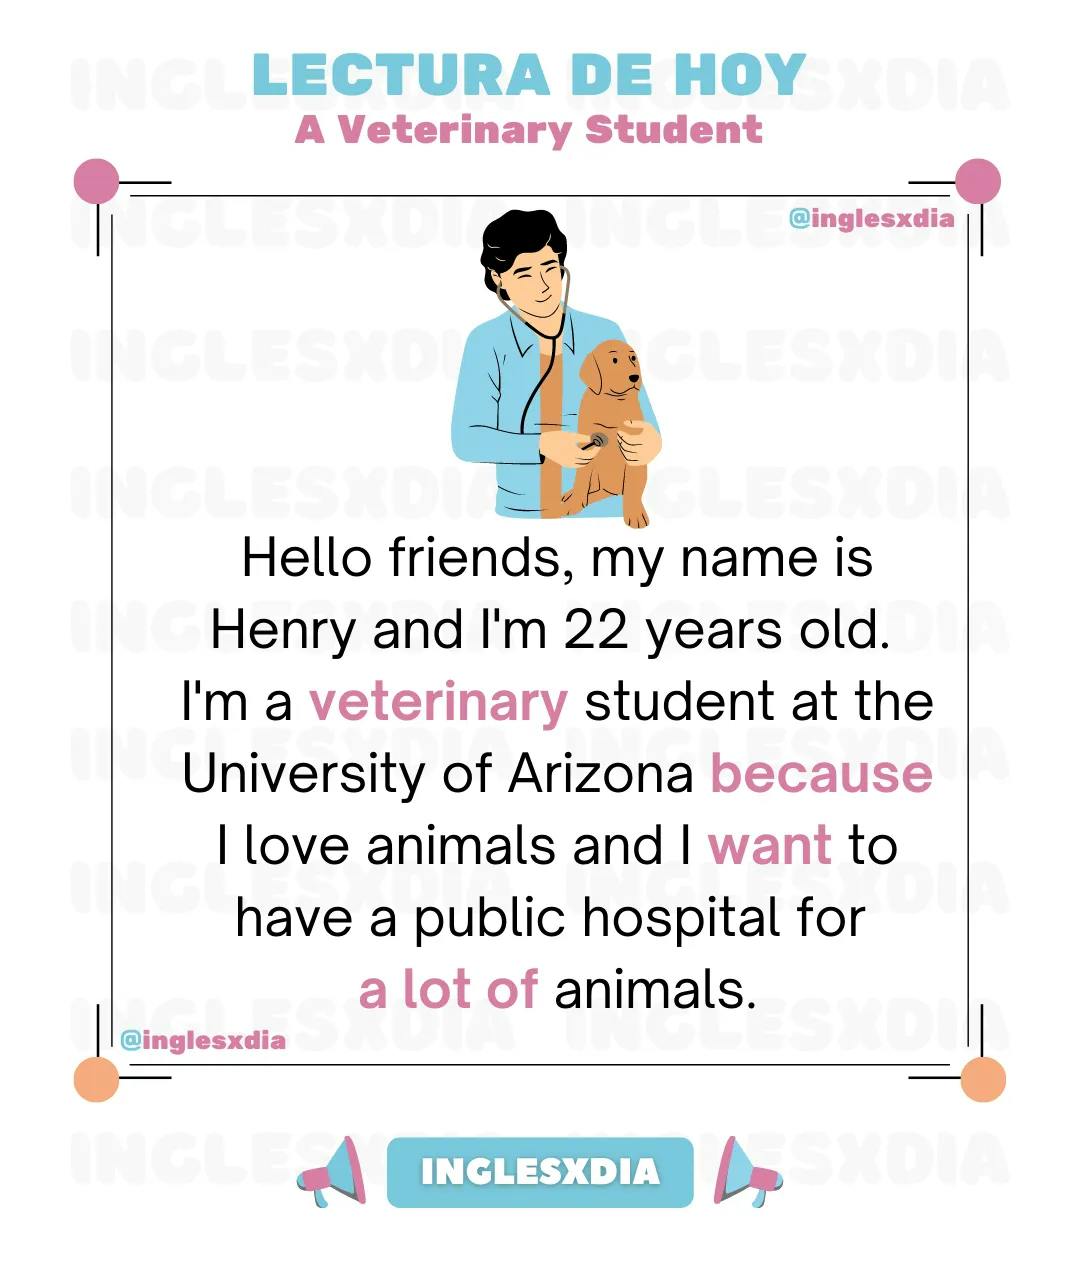 A Veterinary Student